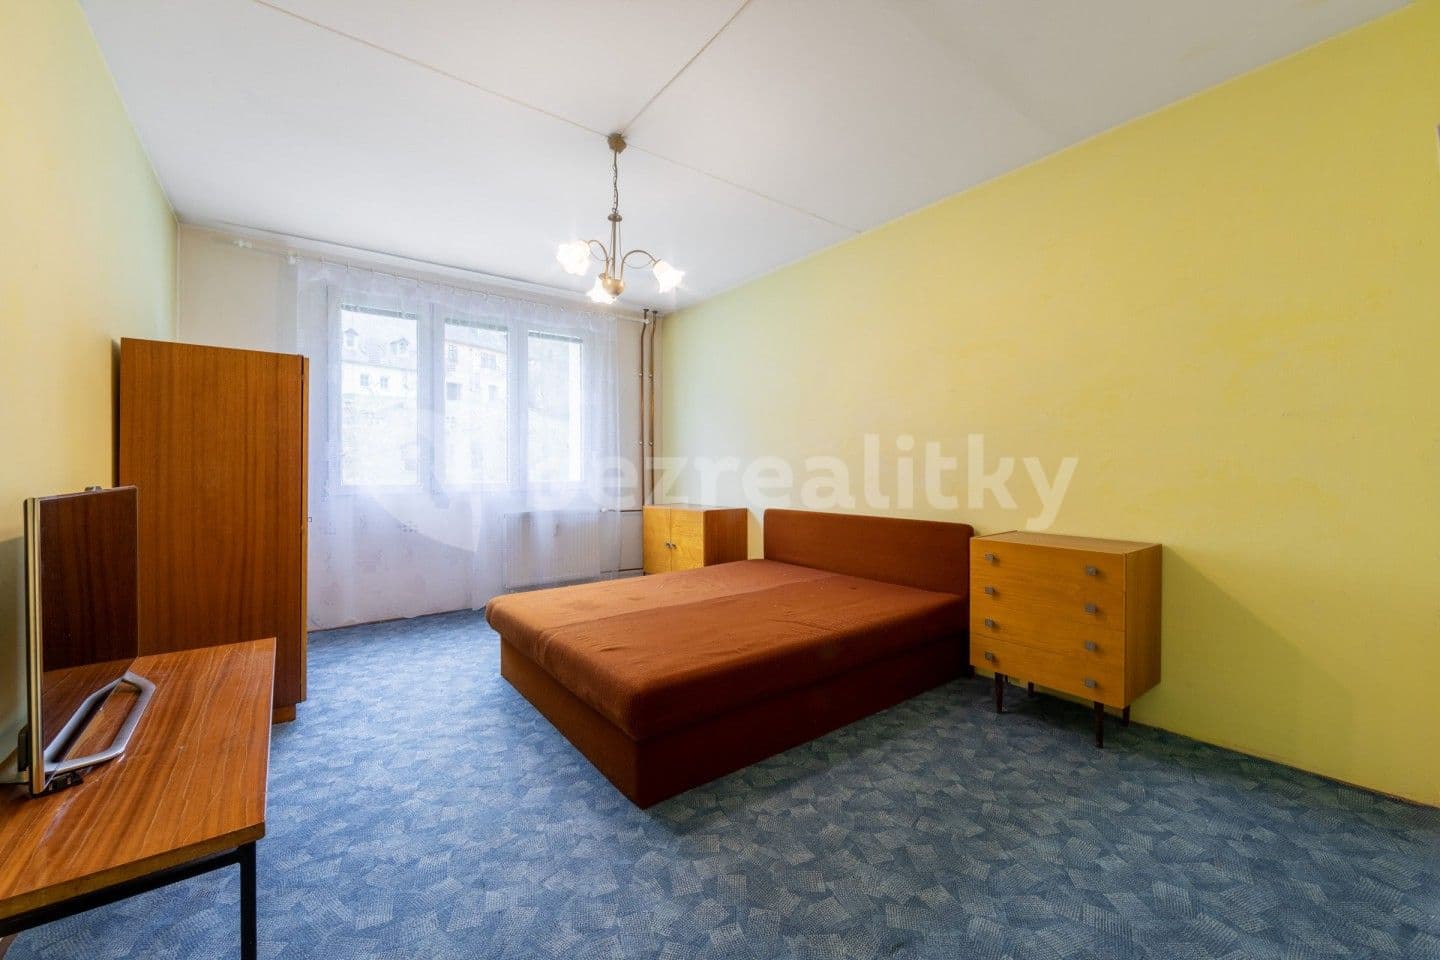 Predaj bytu 2-izbový 62 m², třída Dukelských hrdinů, Jáchymov, Karlovarský kraj